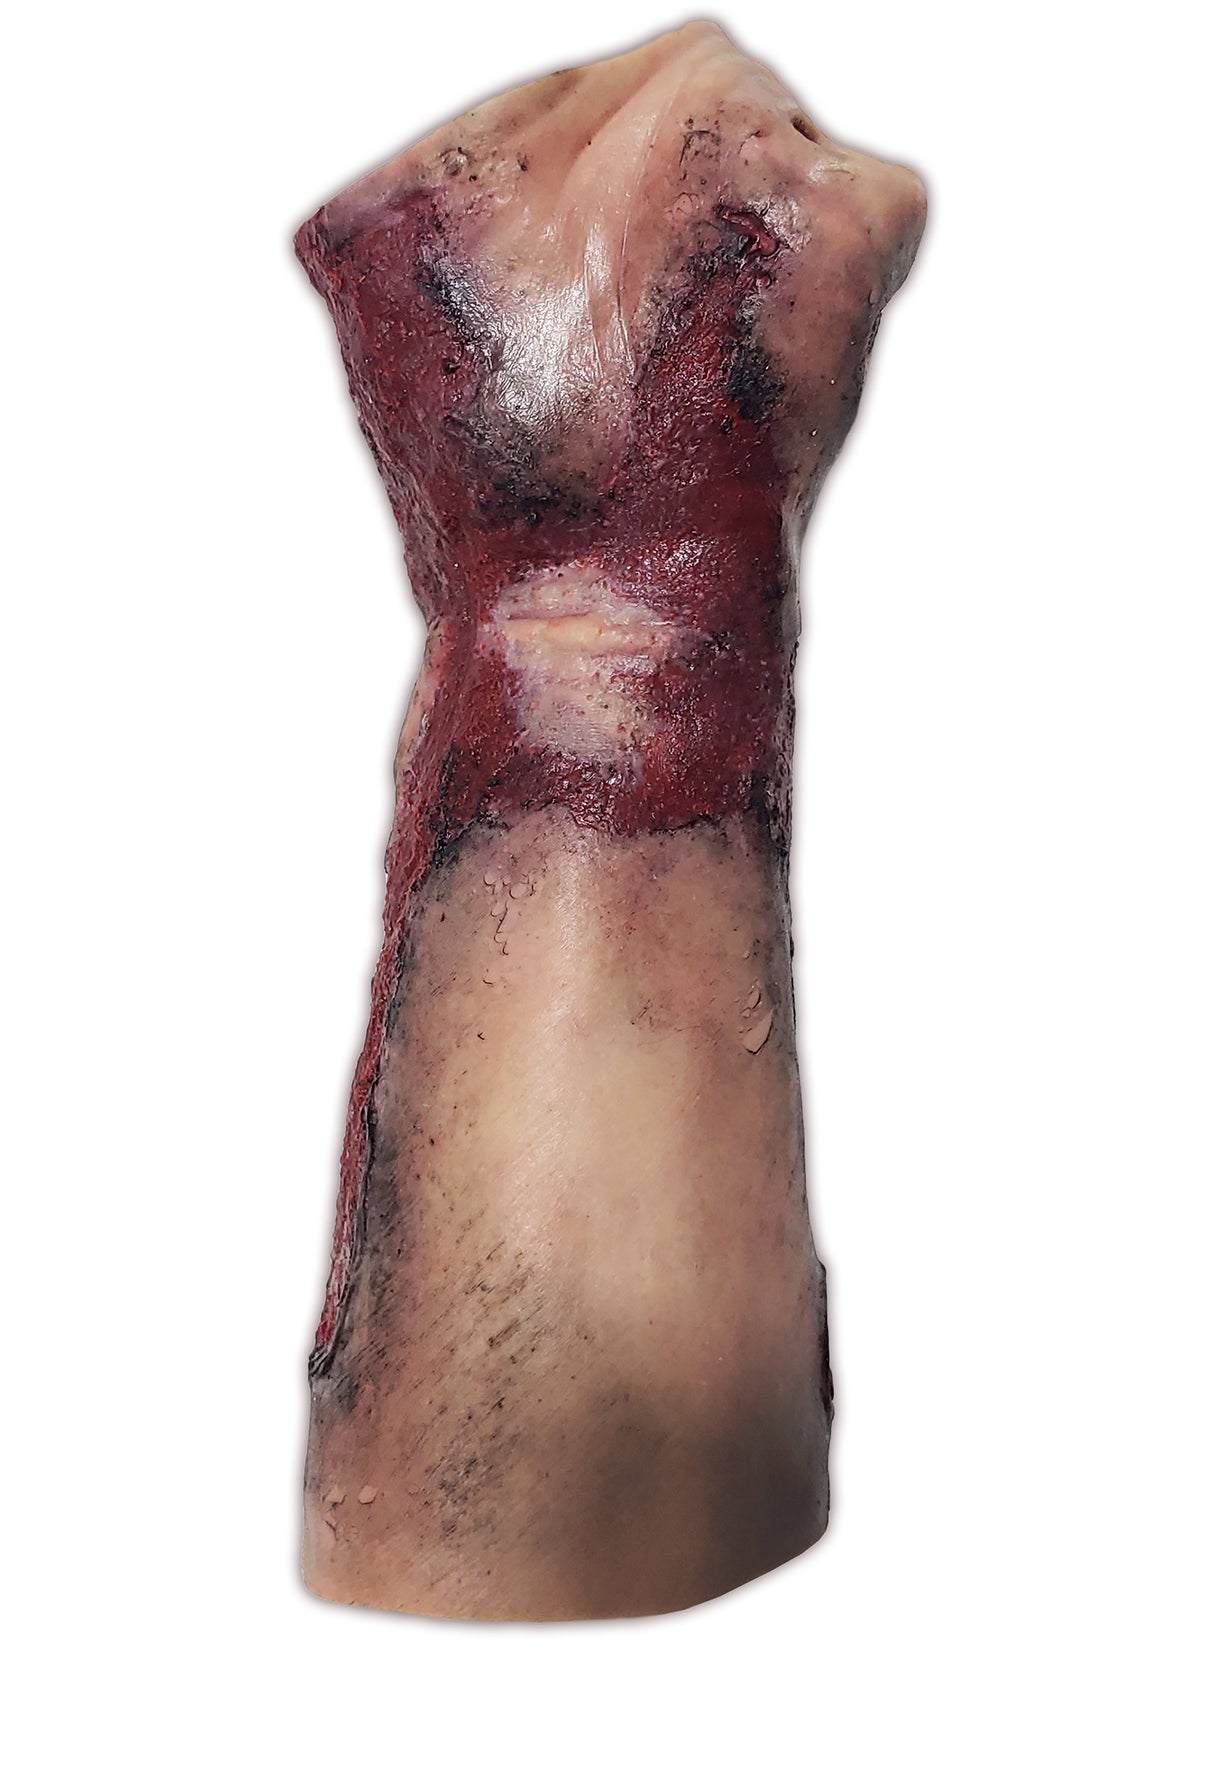 Severe Burn Forearm, Right Arm